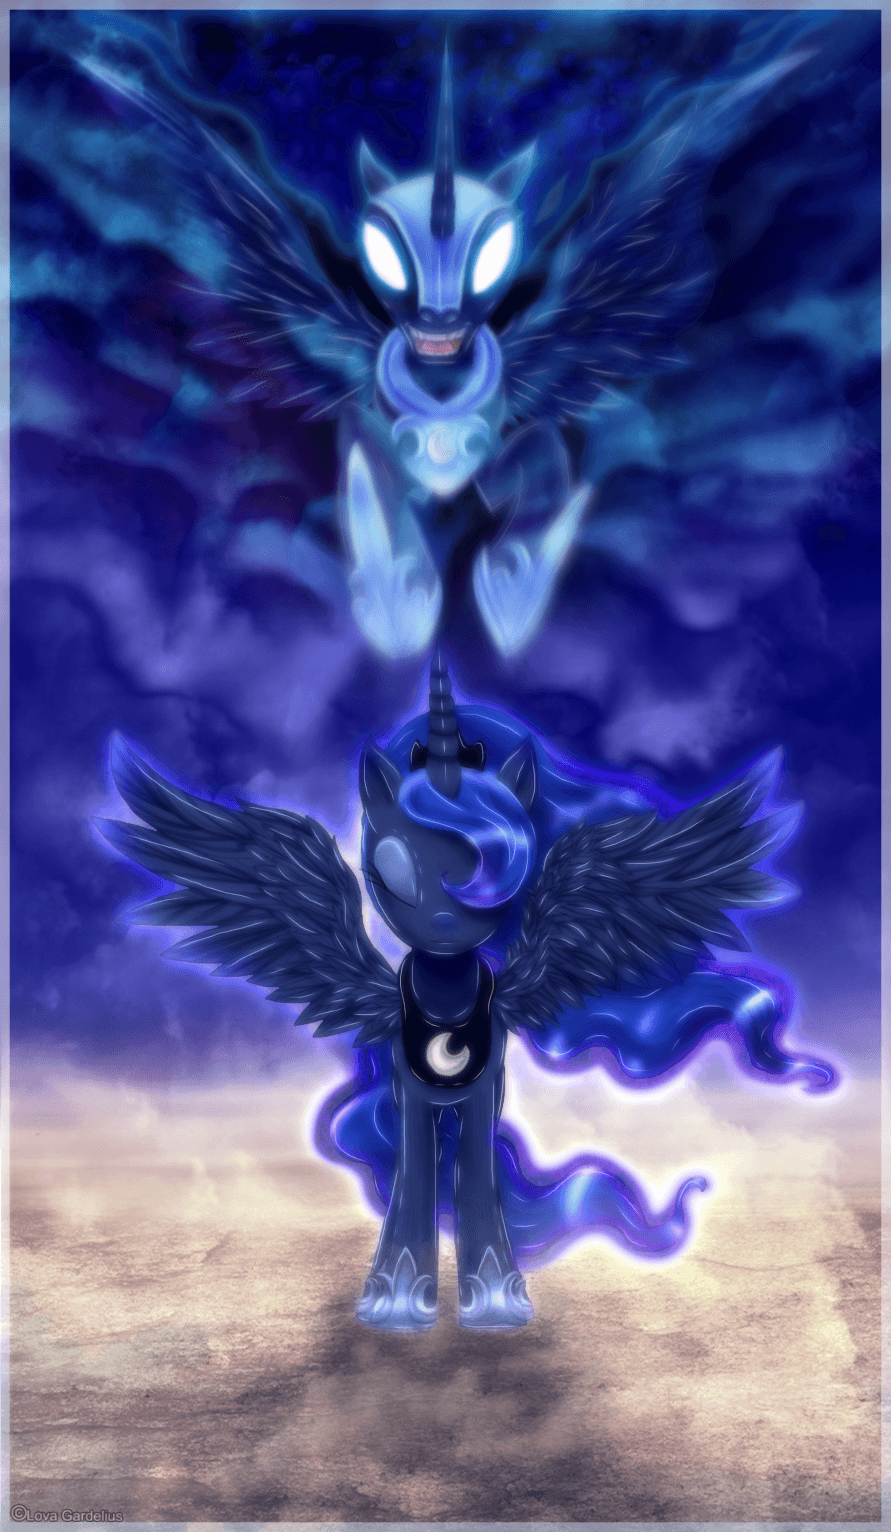 Princess Luna and Nightmare Moon wallpaper